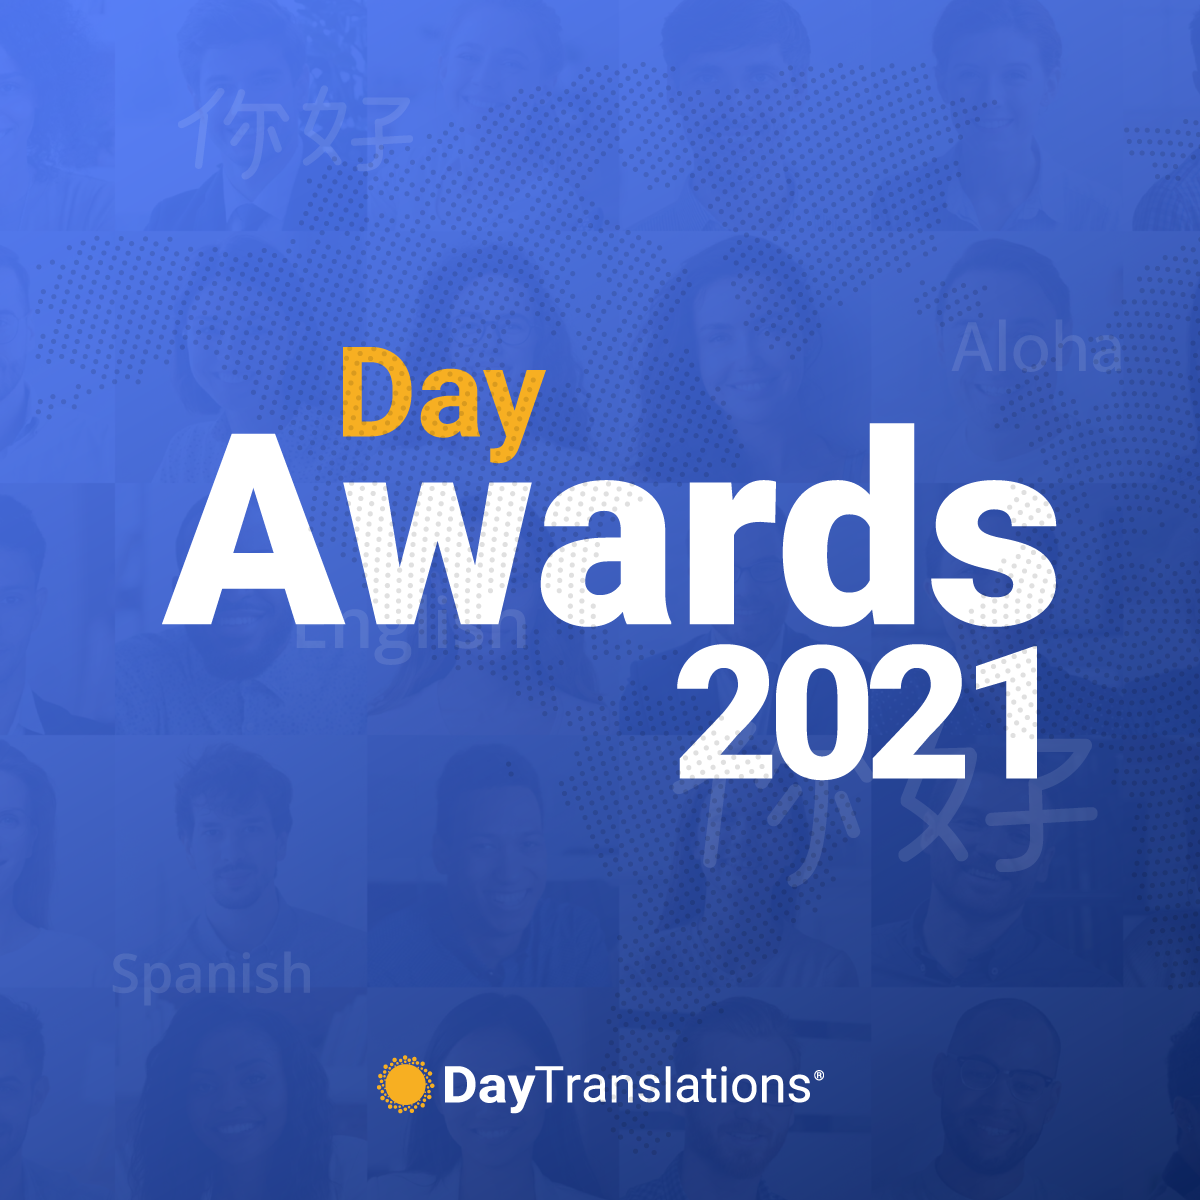 Day Awards 2021